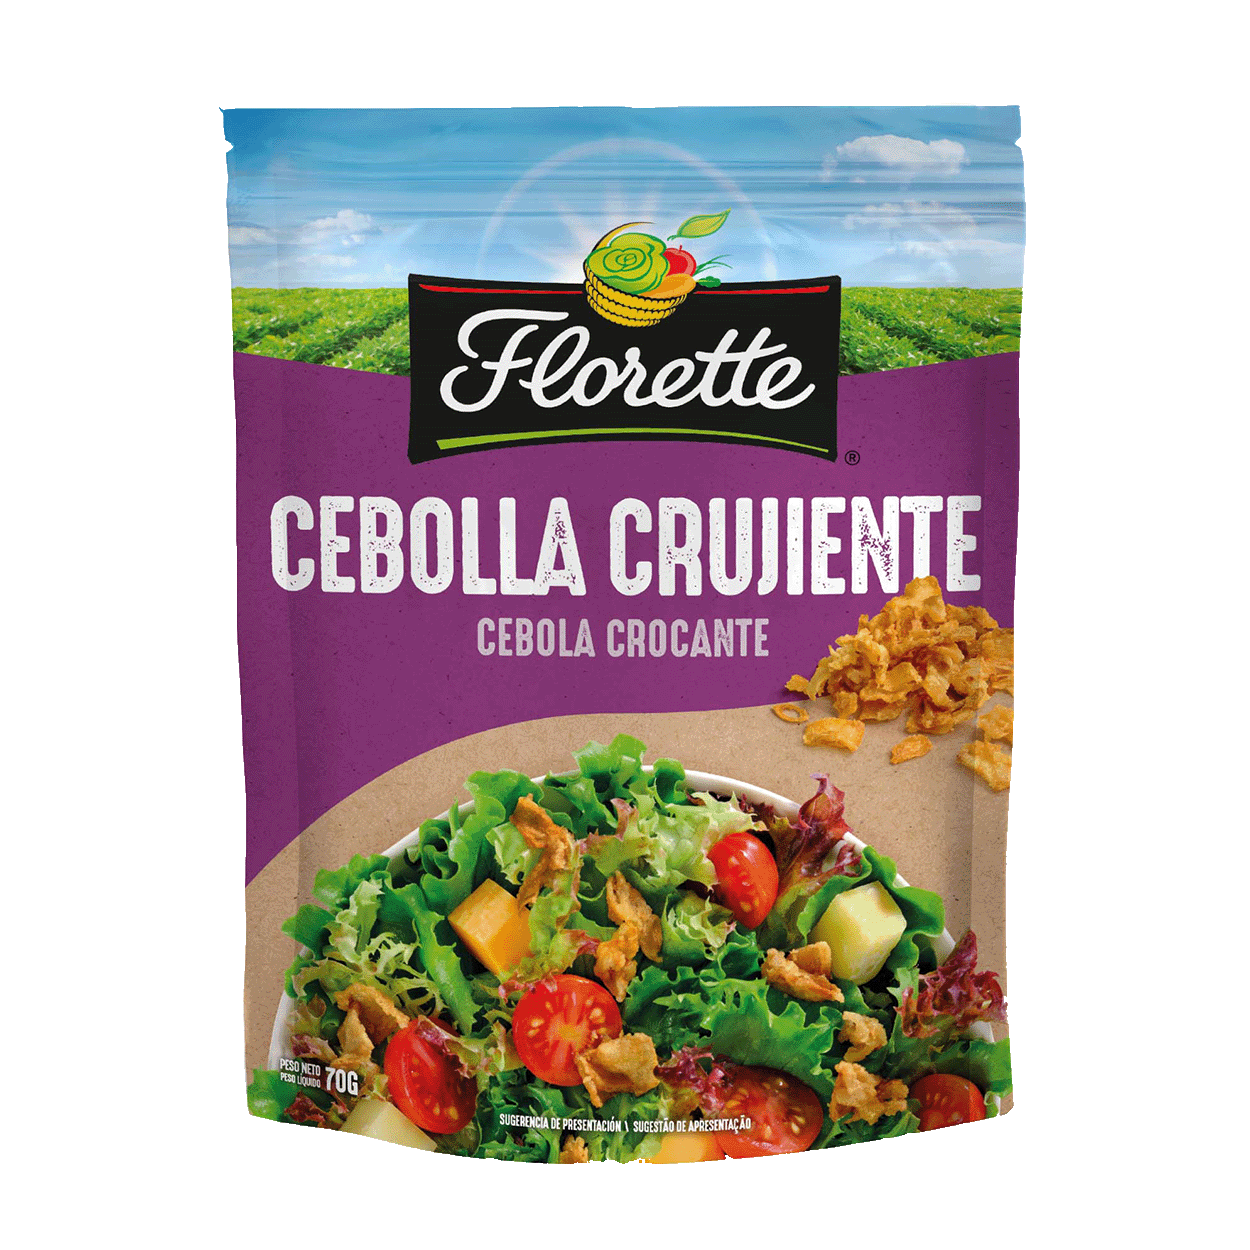 Topping Cebolla Crujiente - Productos Florette